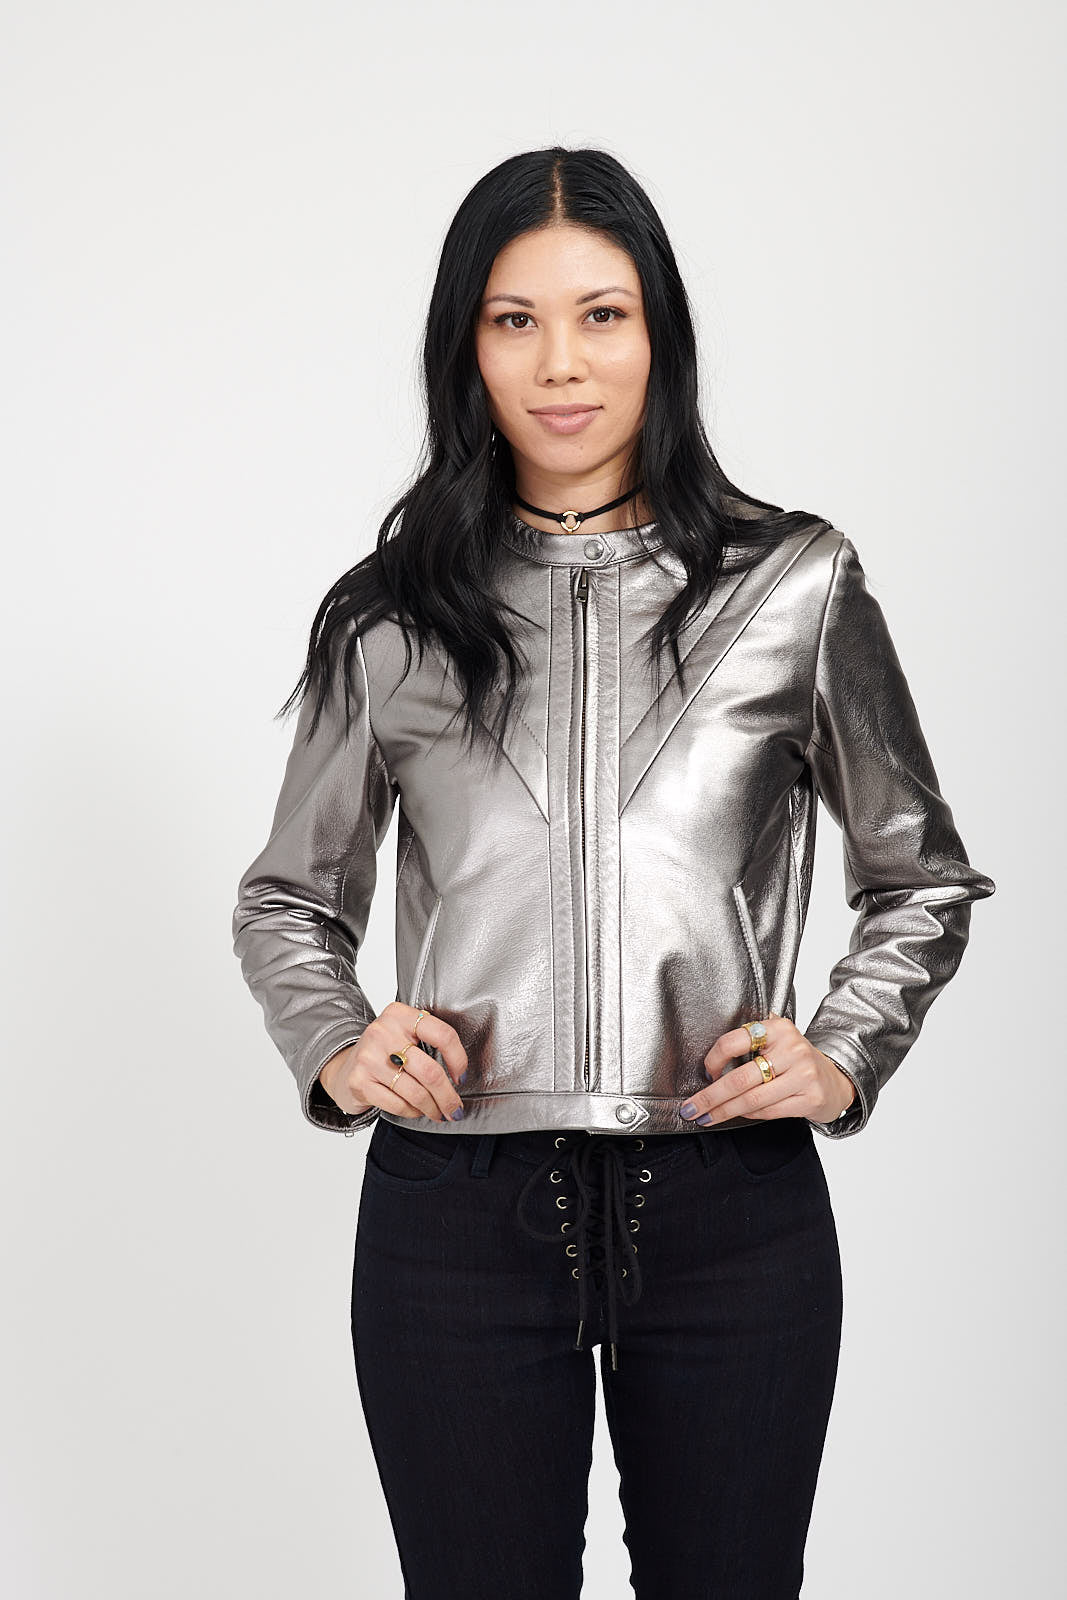 STARFIELD MX Armored Leather Jacket WHITE/BLACK – STELLAR Moto Brand